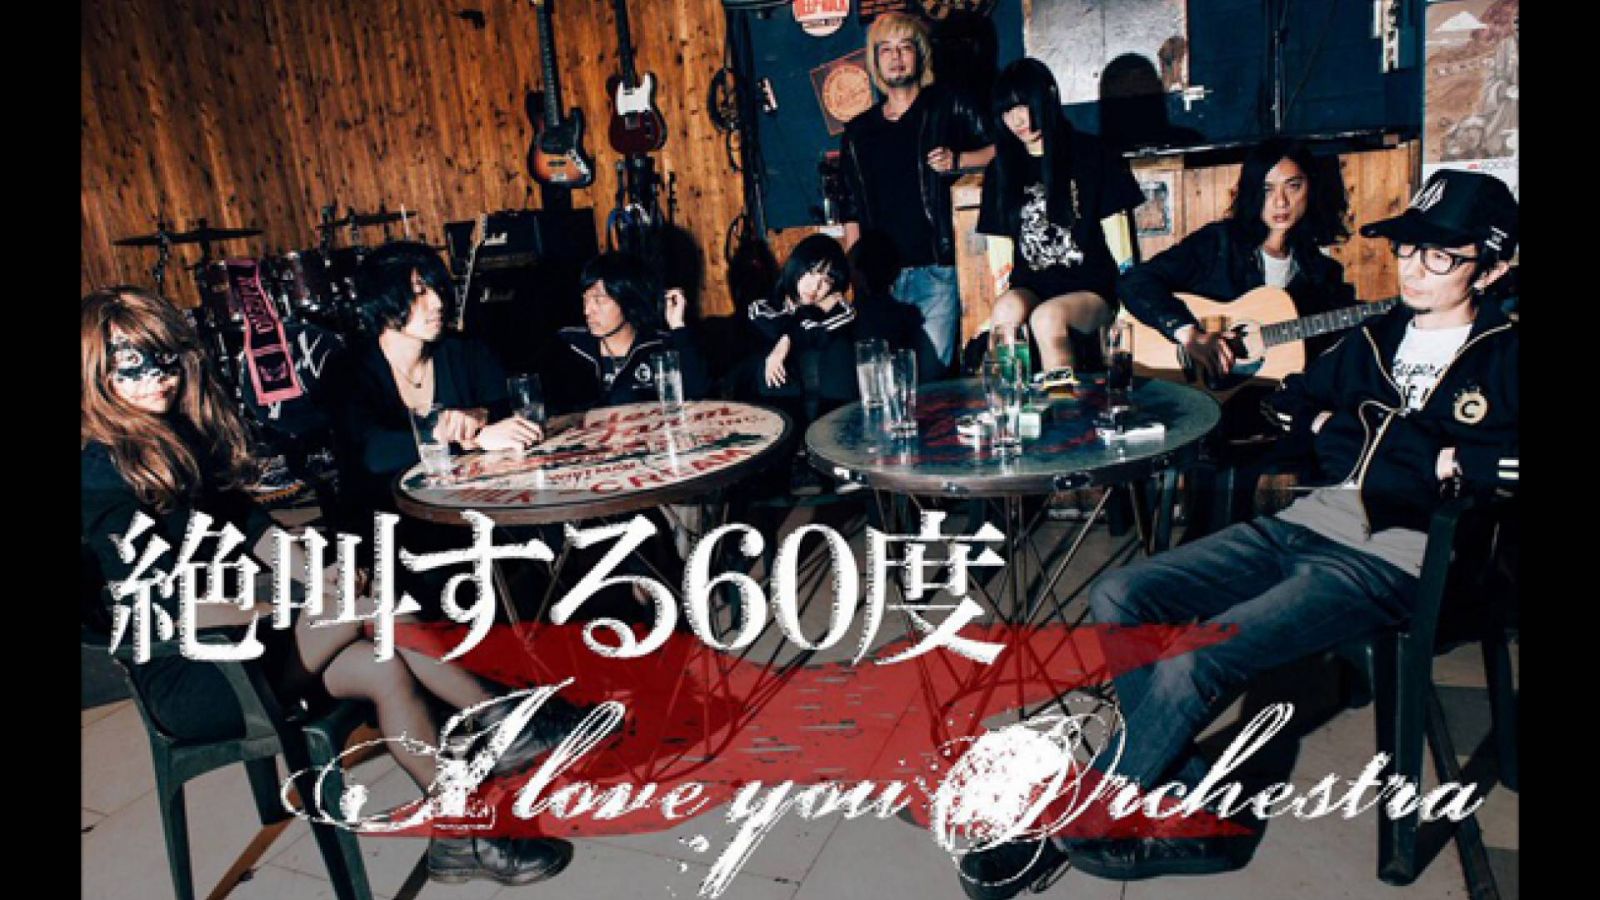 Zekkyou suru 60do y I love you Orchestra lanzarán mini-álbum colaborativo © Zekkyou suru 60do and I love you Orchestra. All rights reserved.